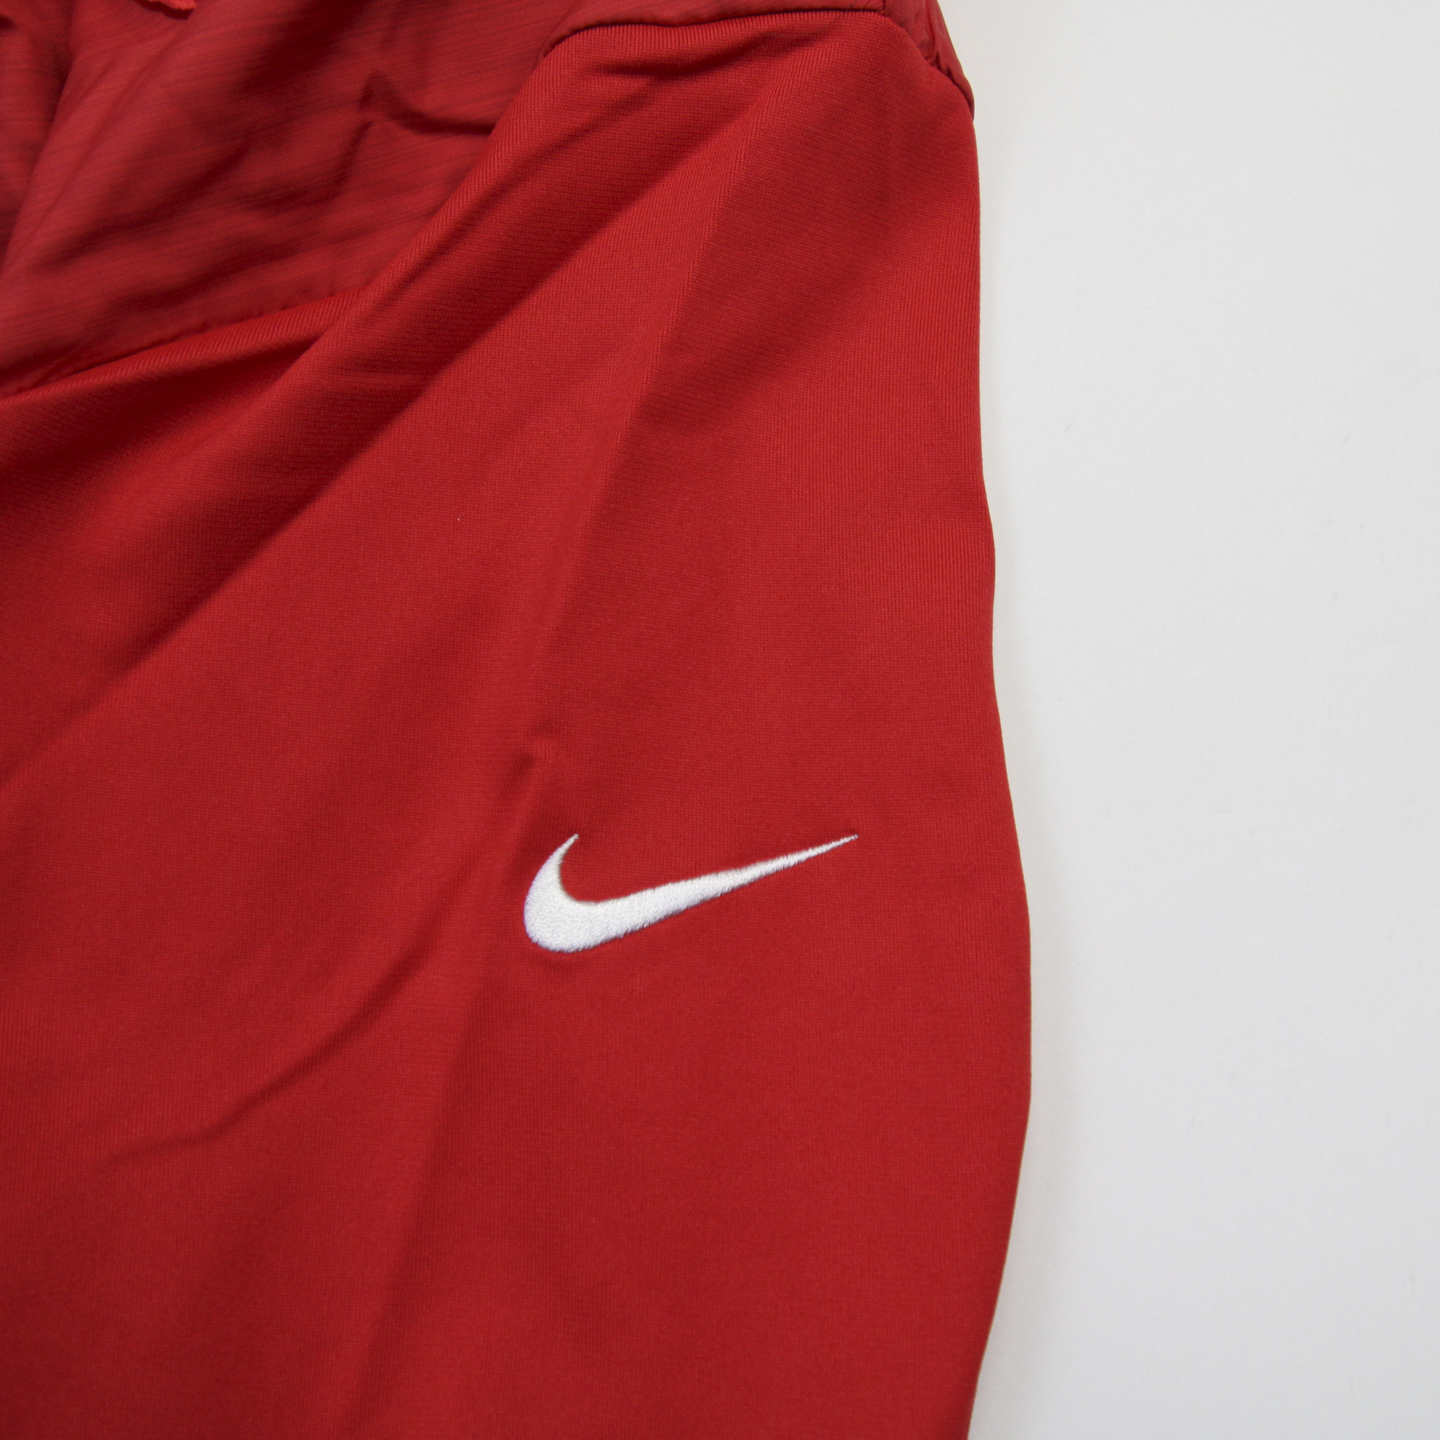 Kansas City Chiefs Nike NFL On Field Apparel Jacket Men's Red New | eBay